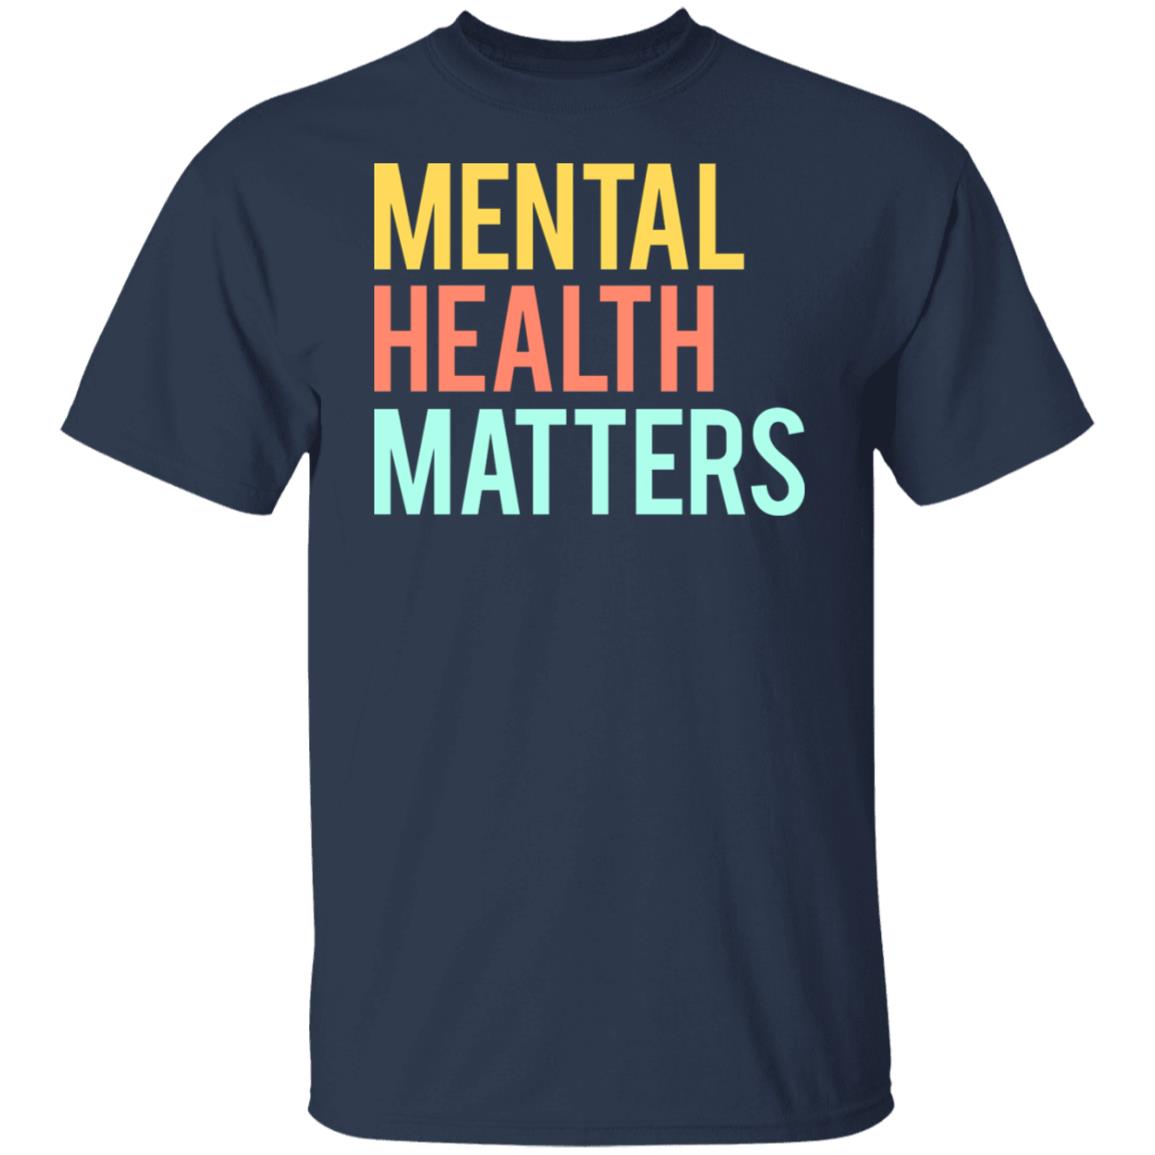 Mental health matters shirt - Lelemoon